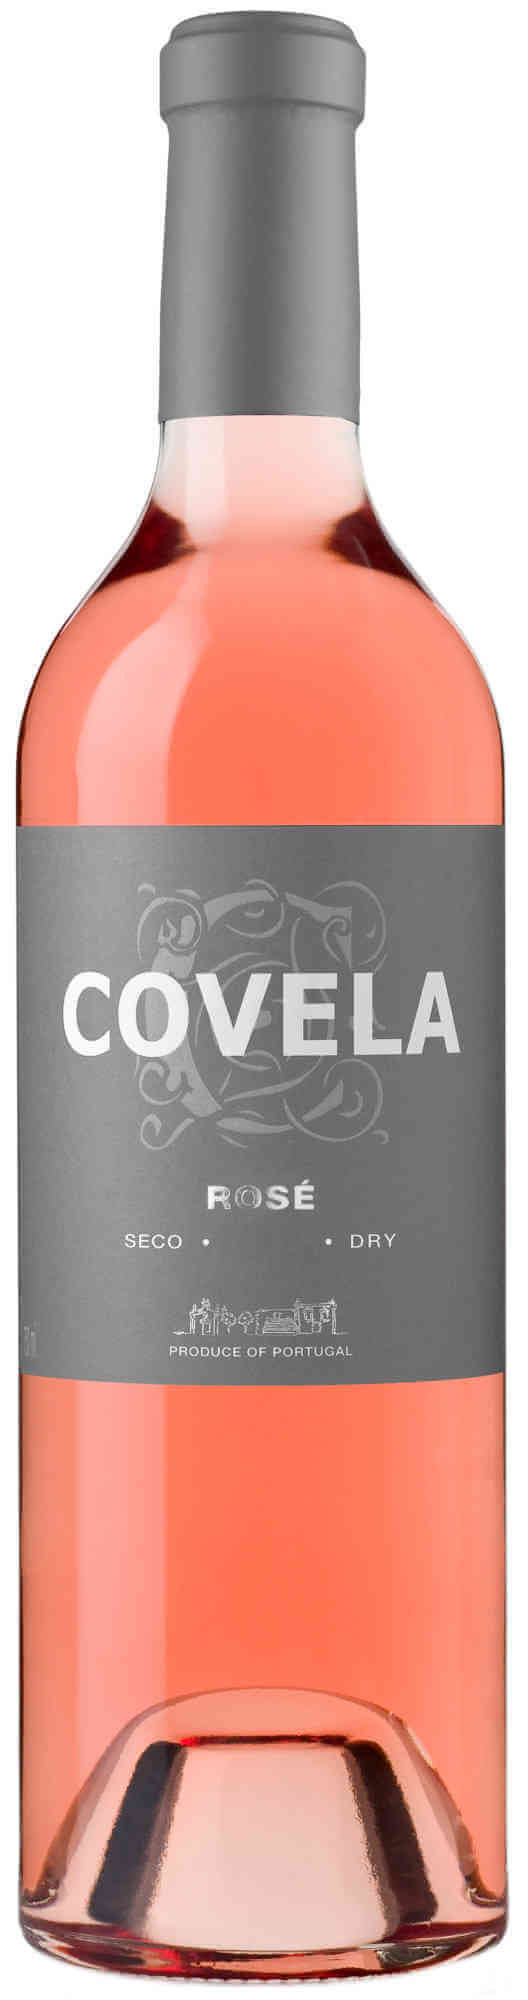 Covela-Rose